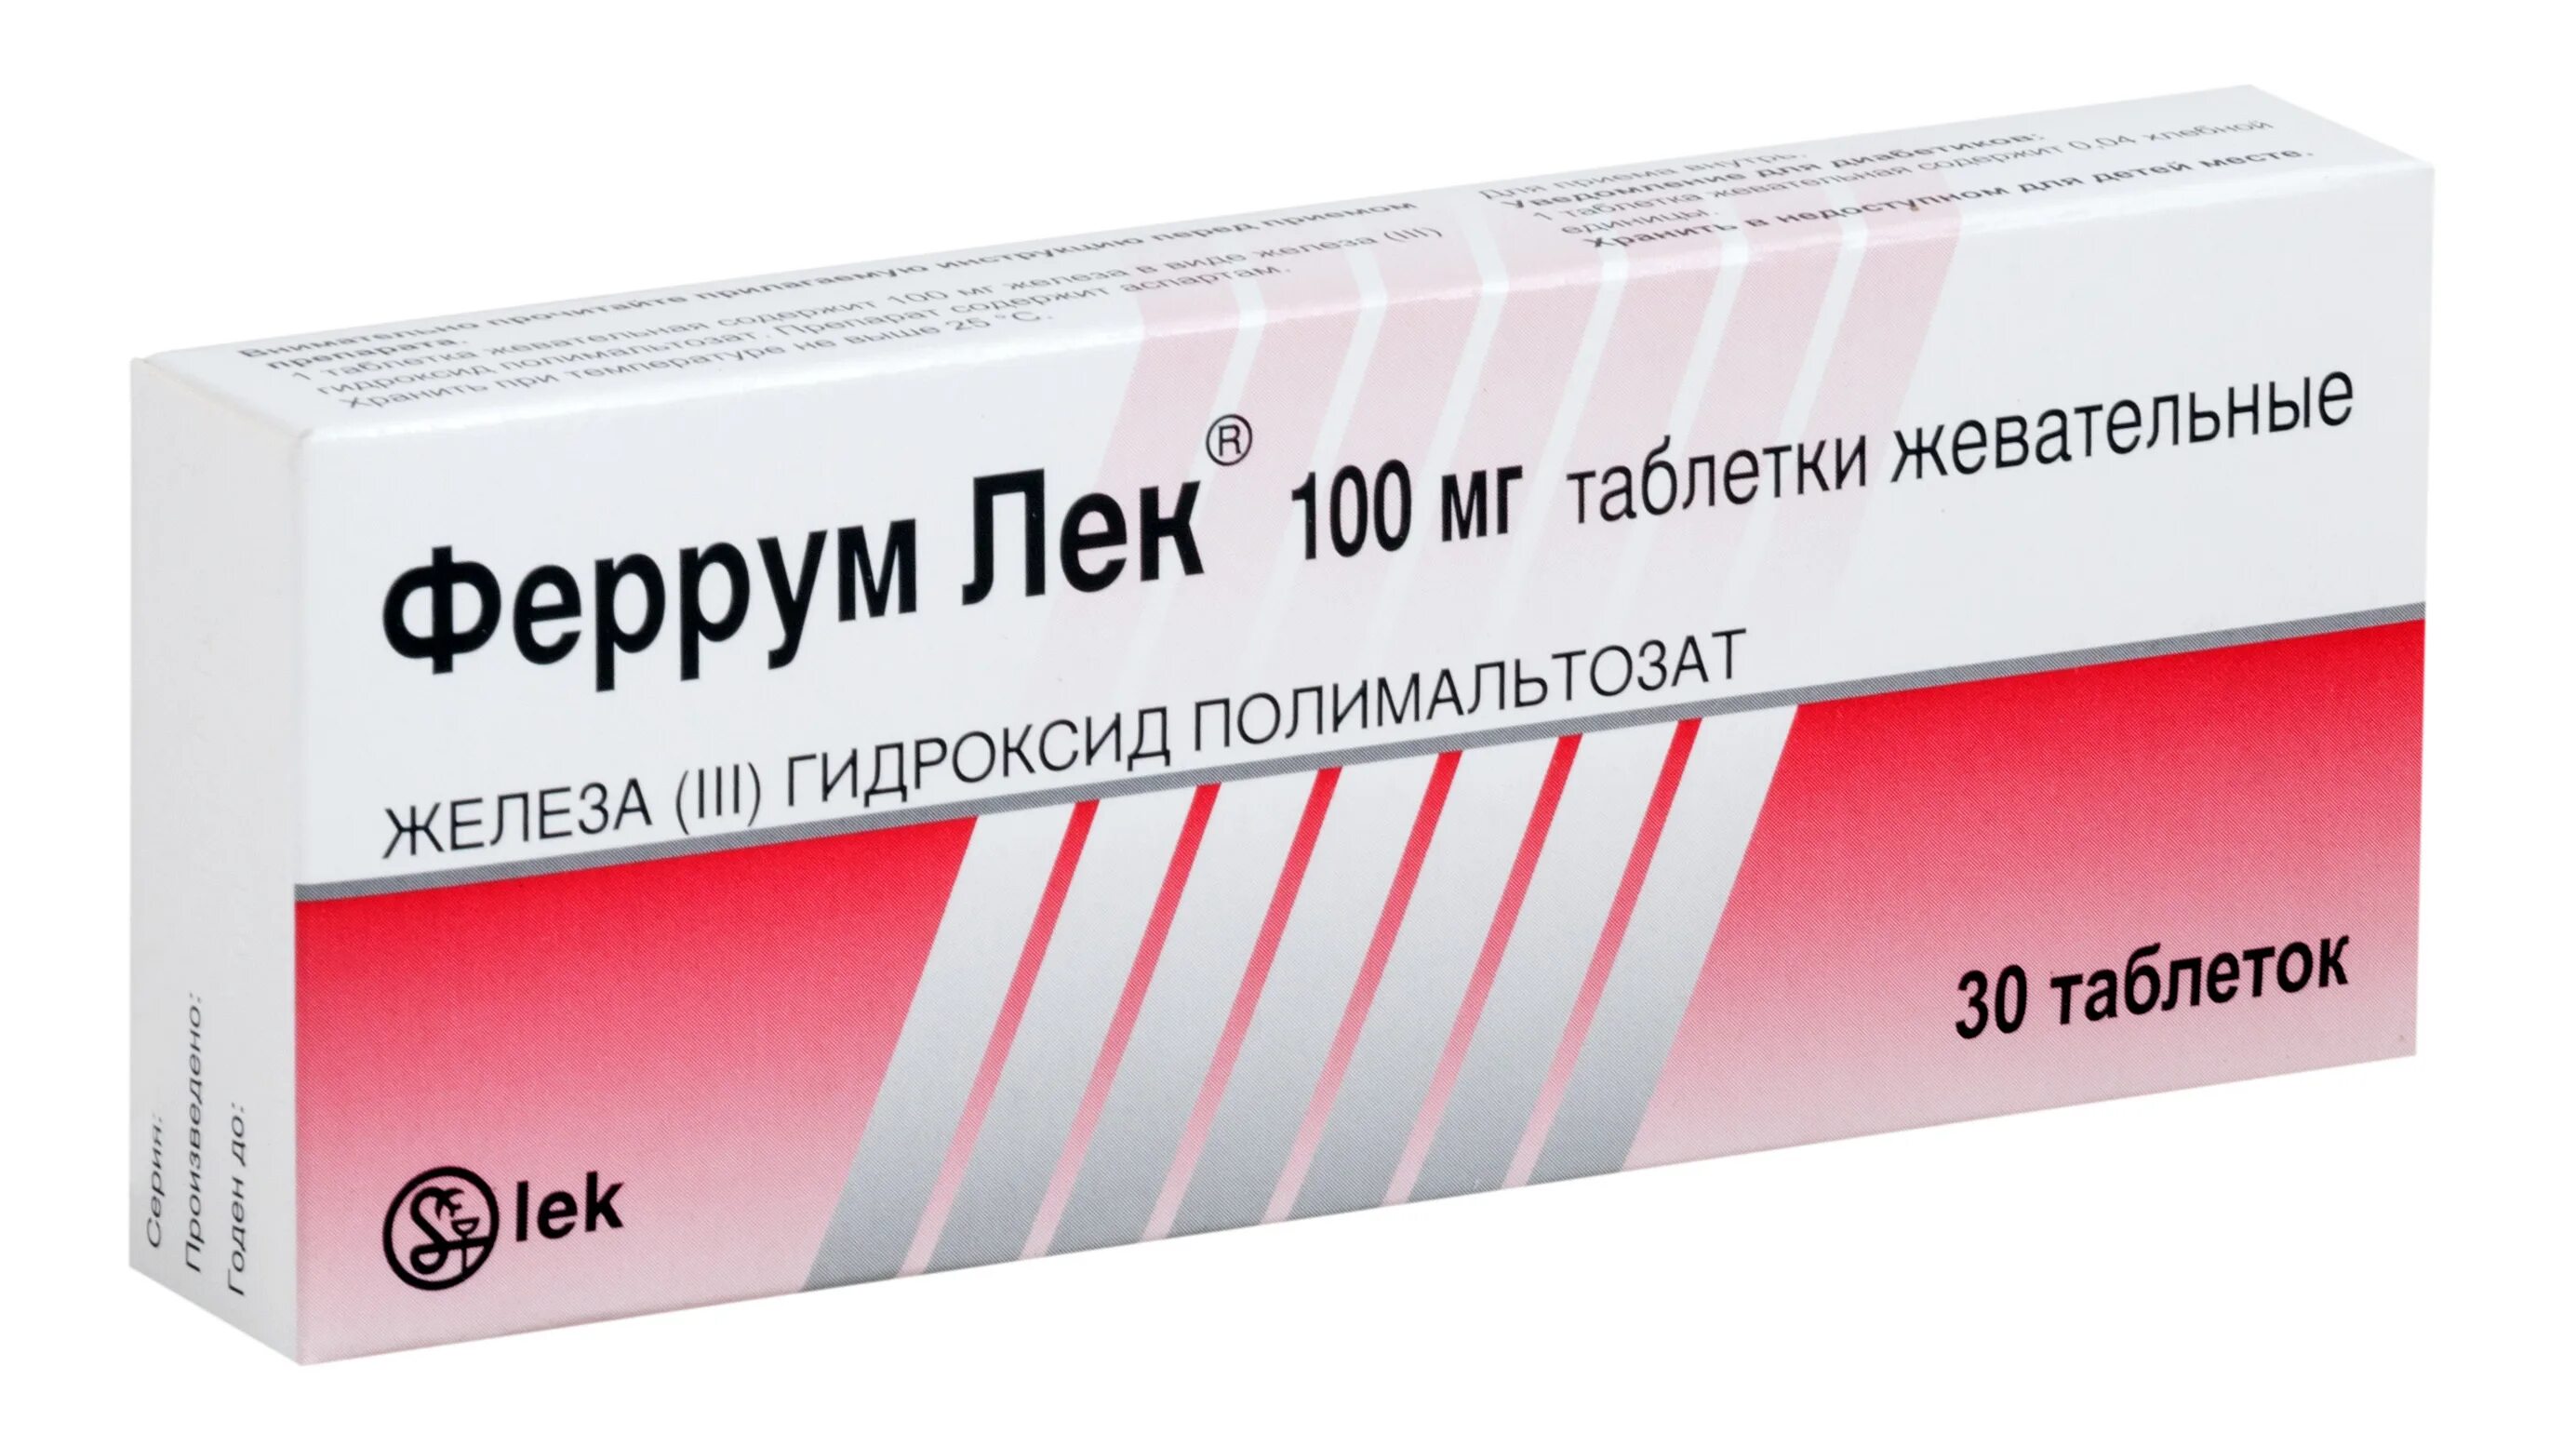 Феррум-лек таблетки 100мг. Железо 3 гидроксид полимальтозат 100 мг таблетки. Ферум-лек таблетки 100 мг. Железа [III] гидроксид полимальтозат таблетки жевательные, 100 мг.